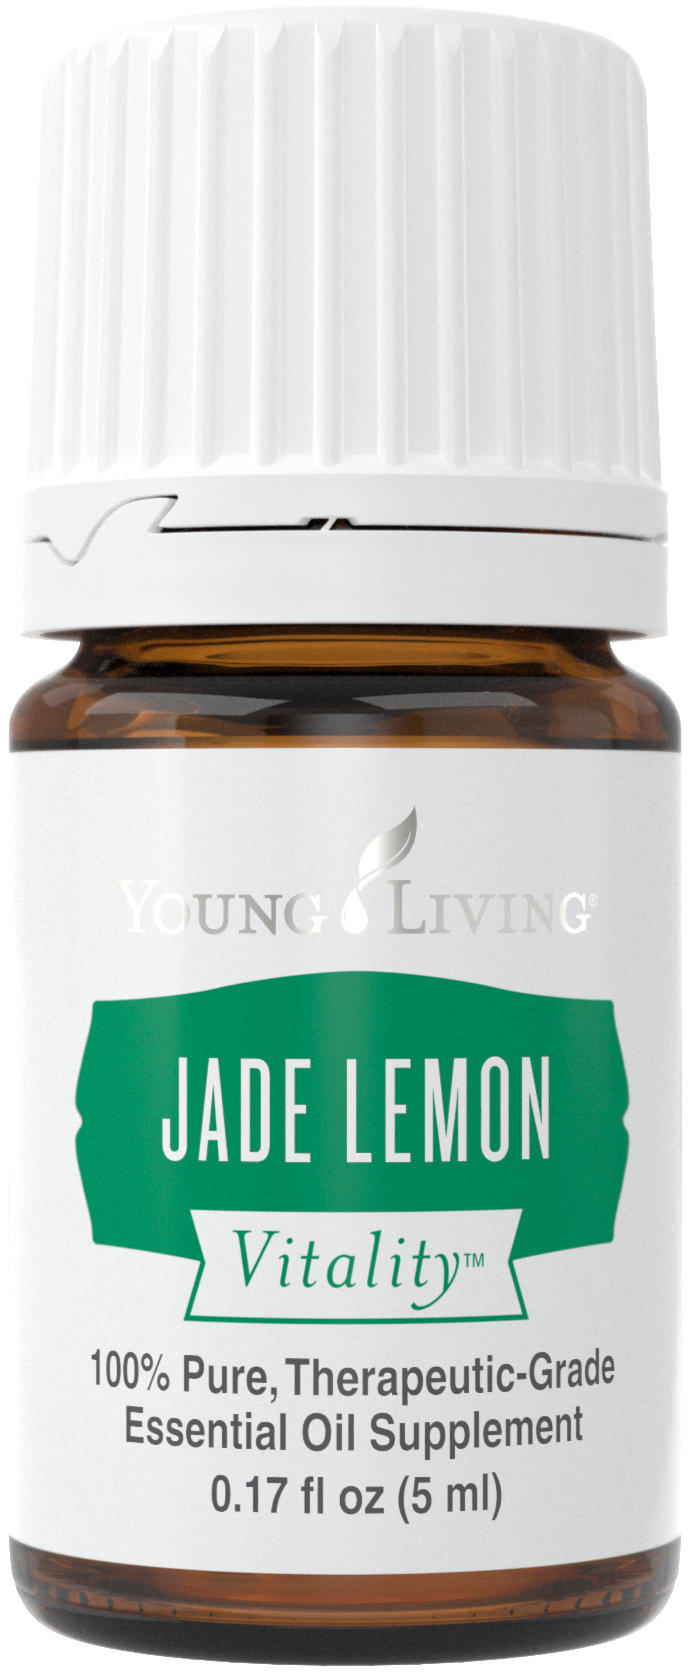 Jade Lemon Vitality Silo.png